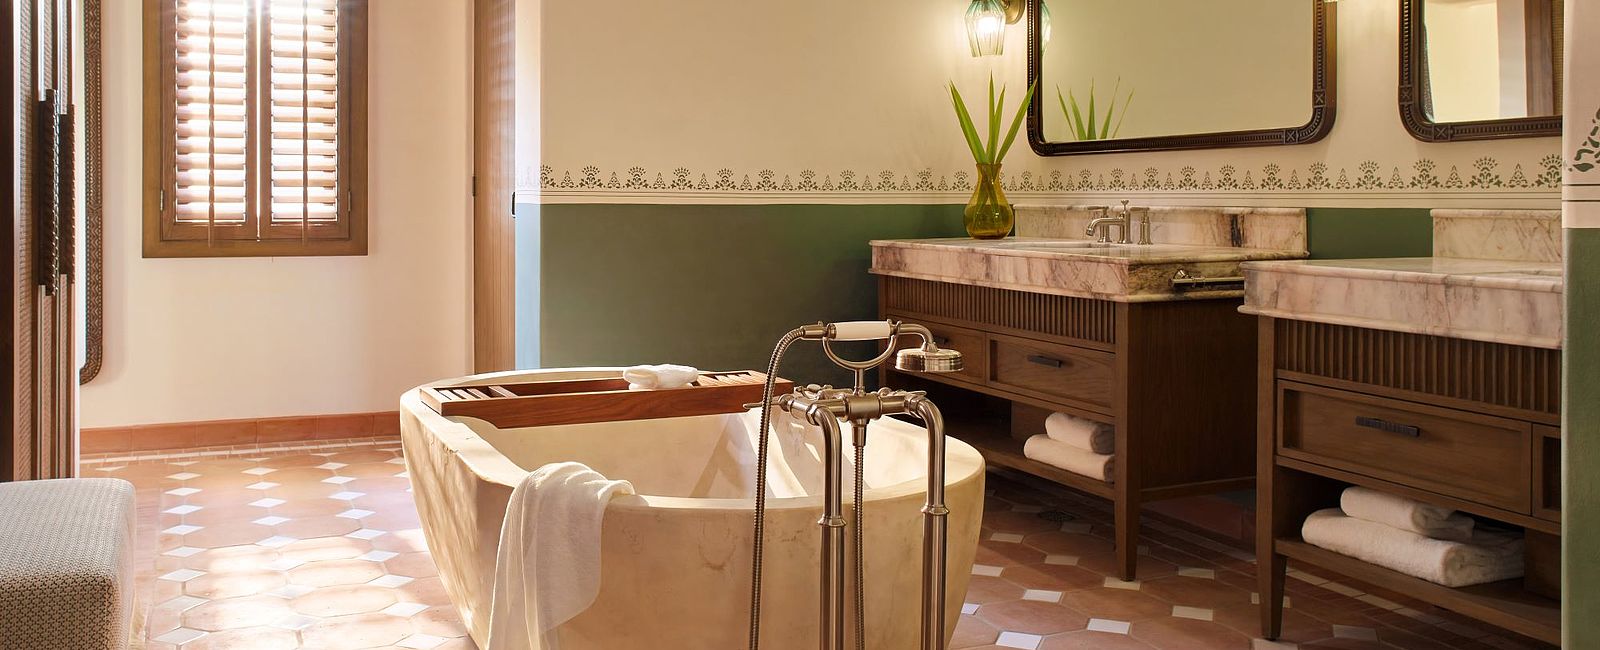 HOTEL ANGEBOTE
 Maroma, A Belmond Hotel, Riviera Maya: The Suite Life 
